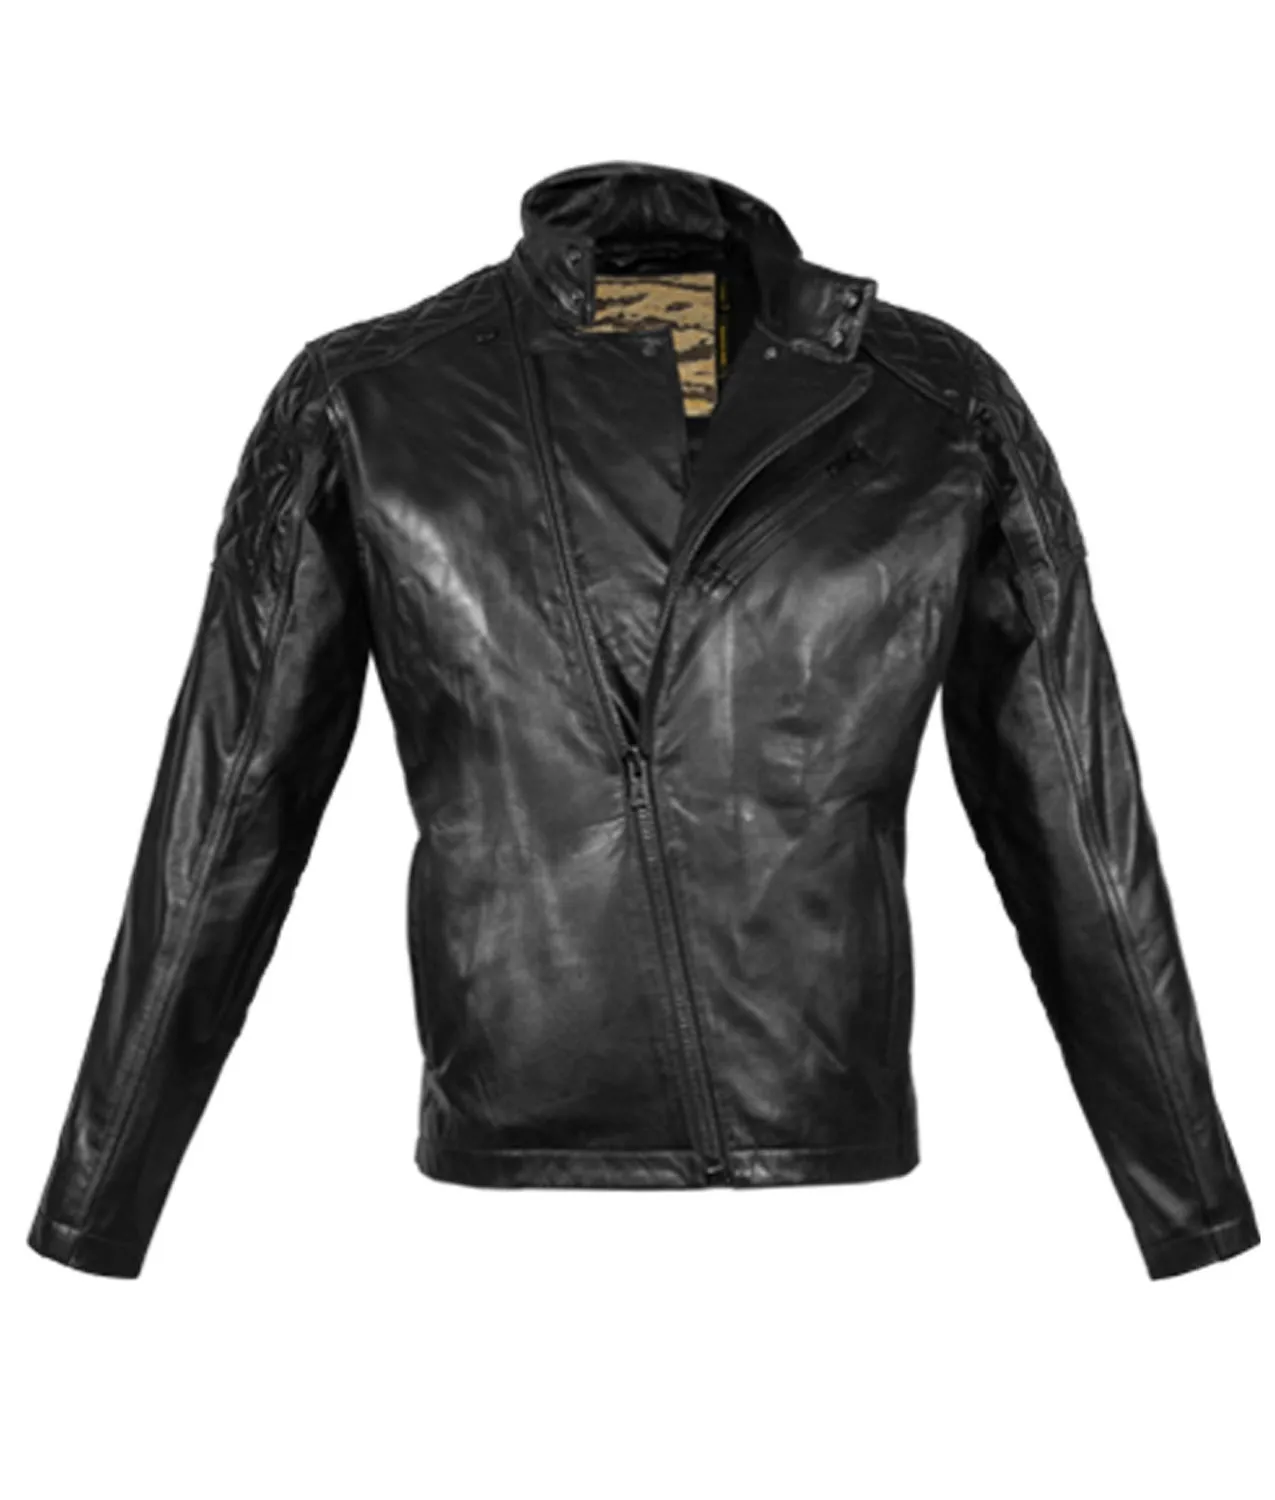 Big Boss Metal Gear Solid 5 Leather Jacket - Jacketify